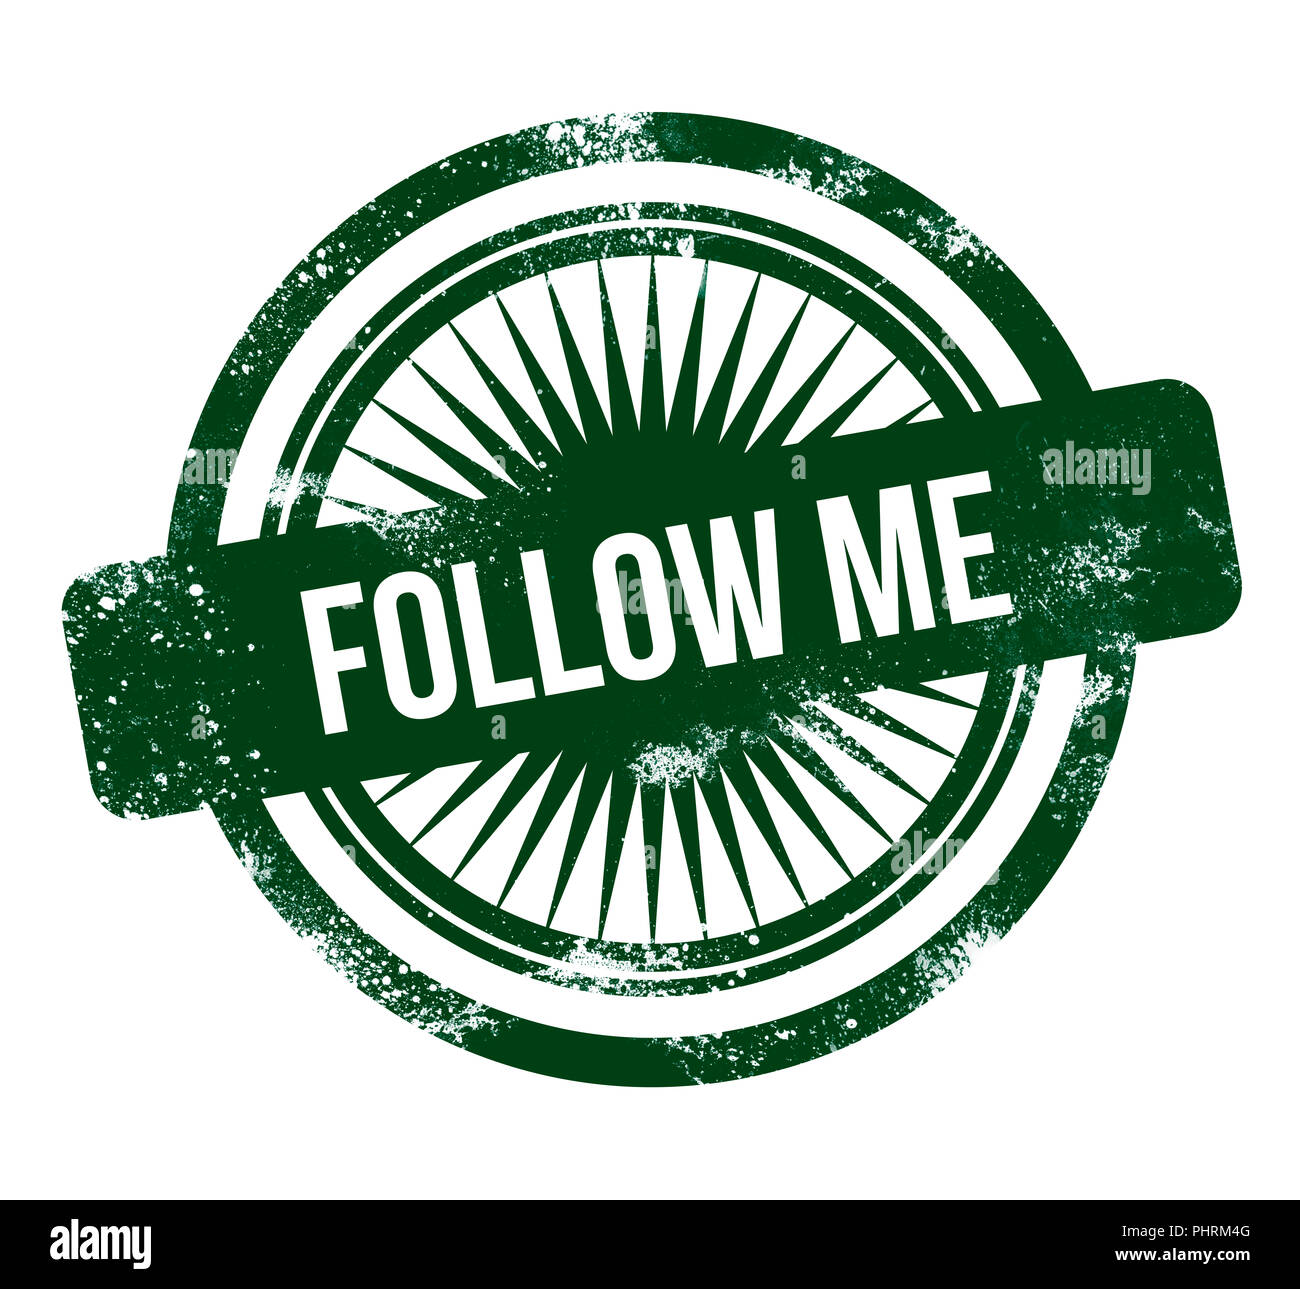 follow me - green grunge stamp Stock Photo